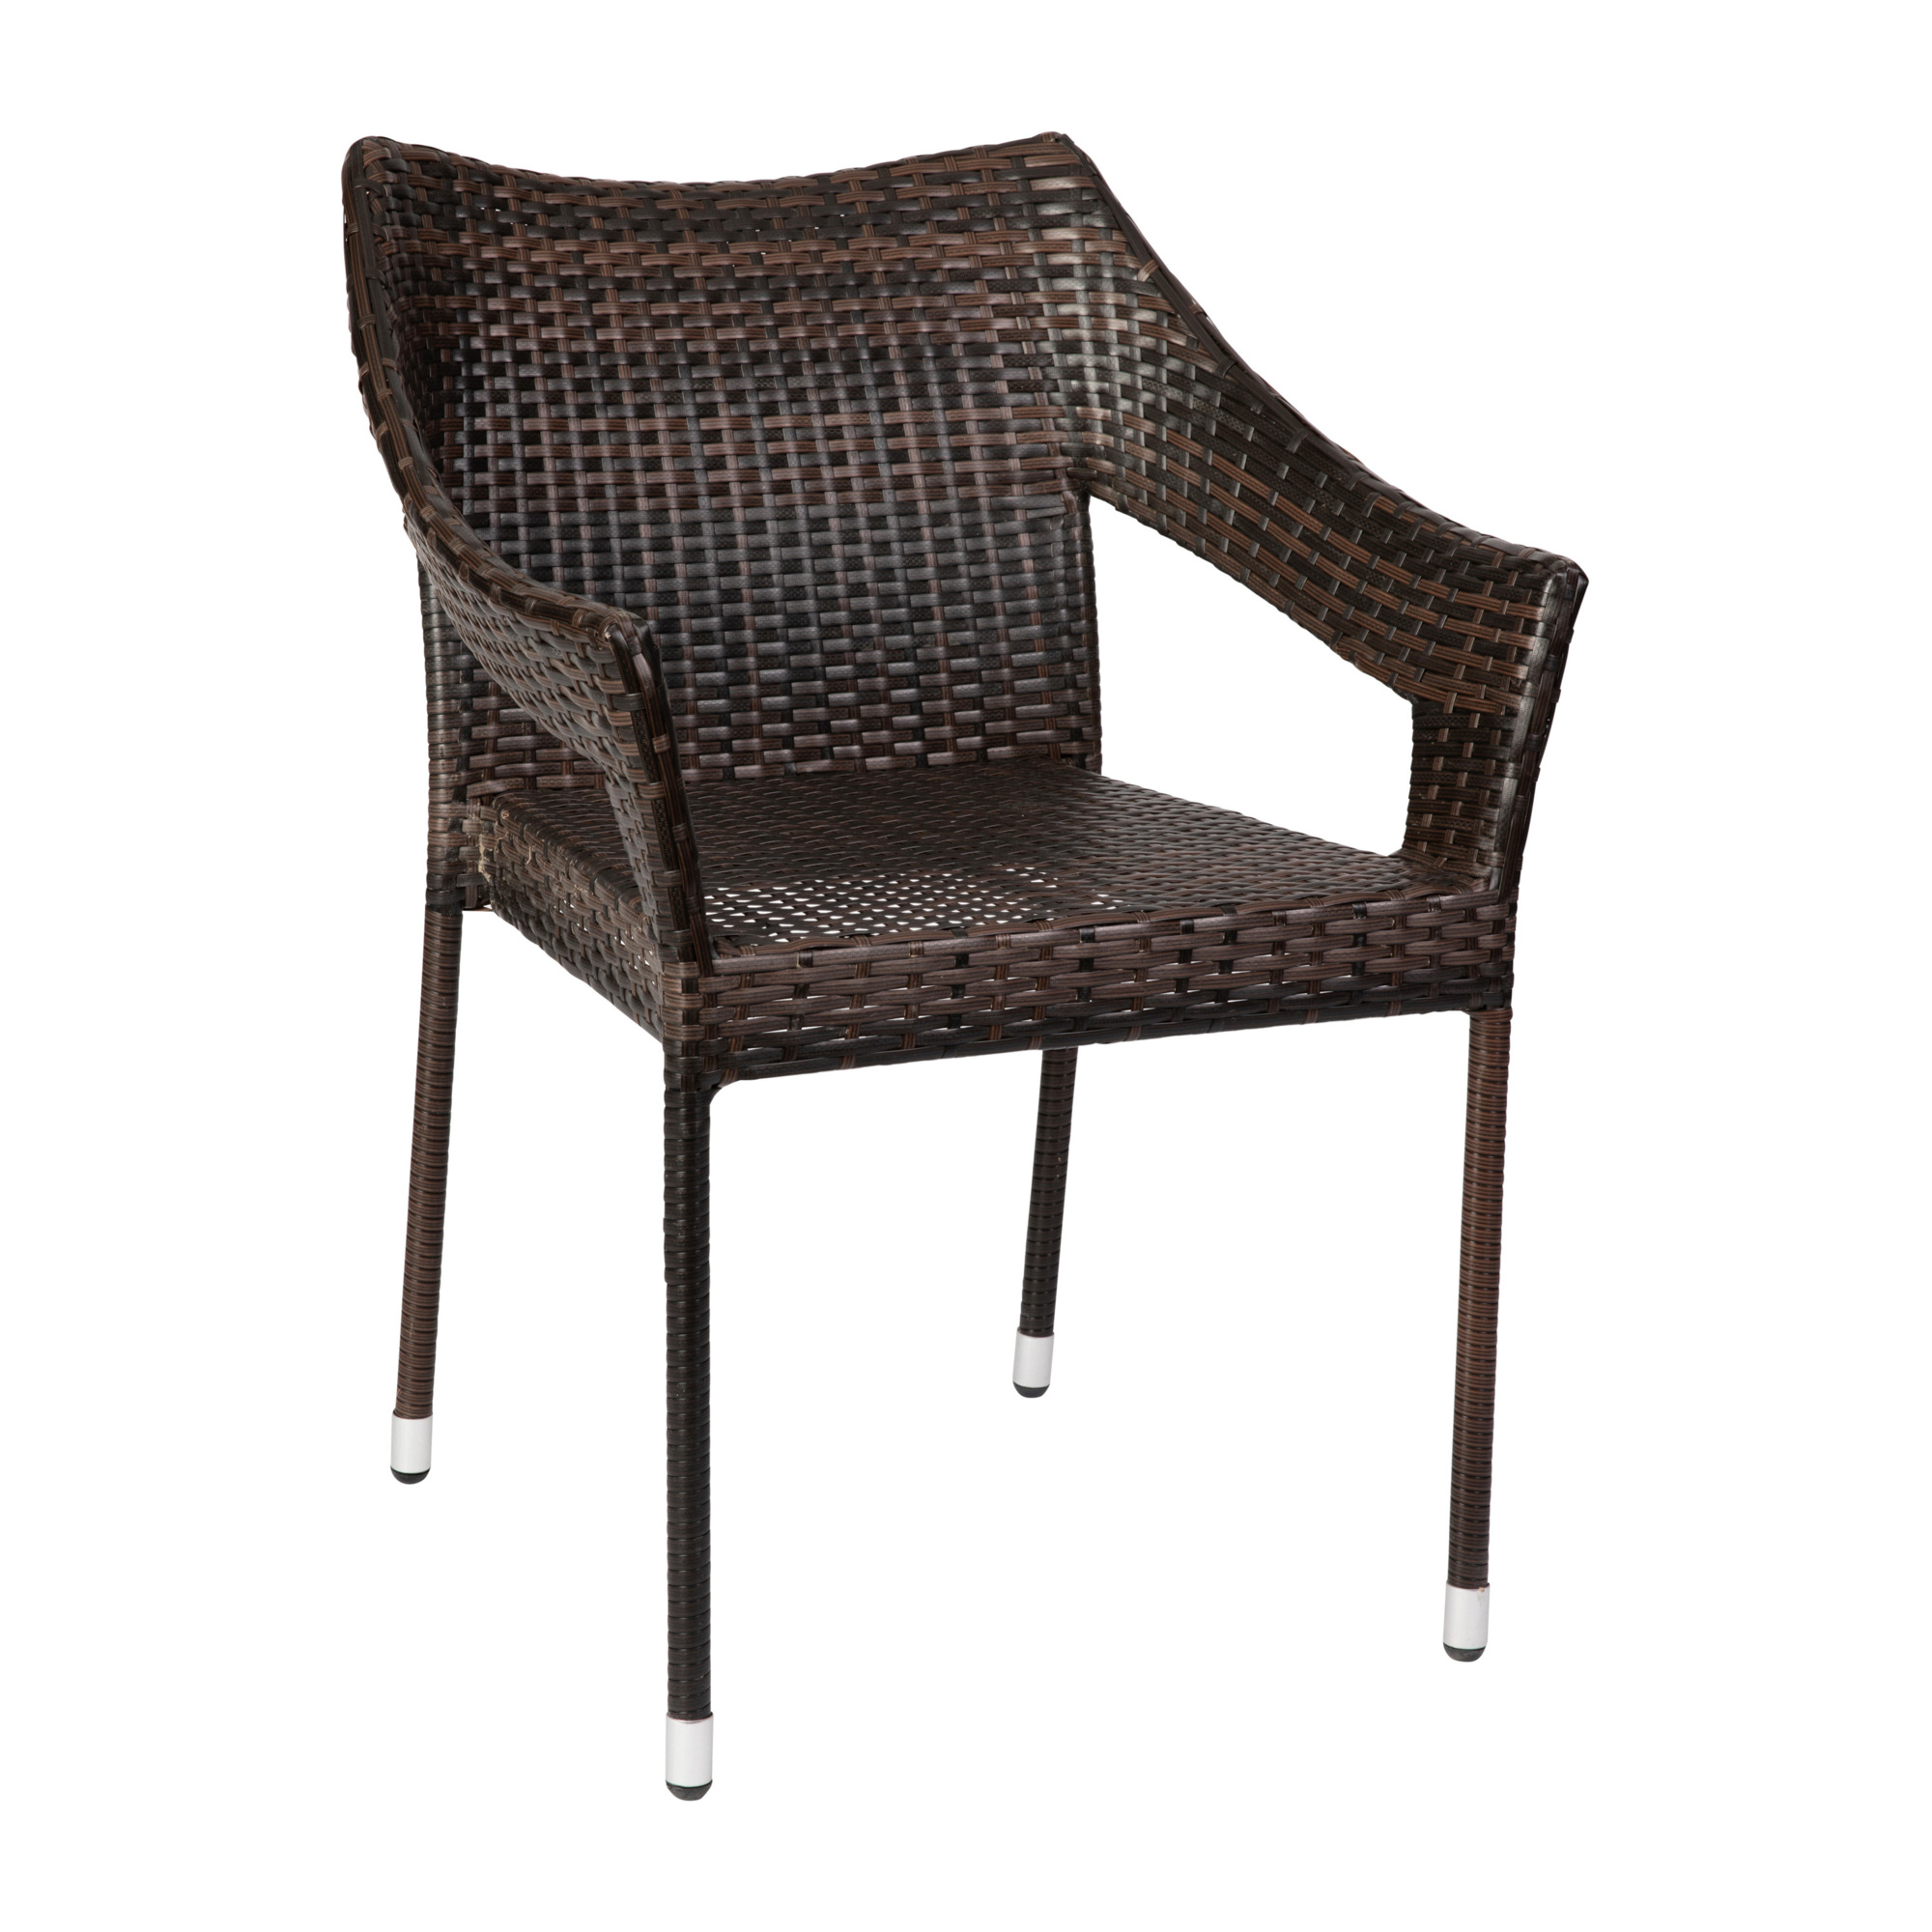 Flash Furniture, Espresso PE Rattan Wicker Patio Dining Chair, Primary Color Brown, Material Steel, Width 23.5 in, Model TTTT02ESP